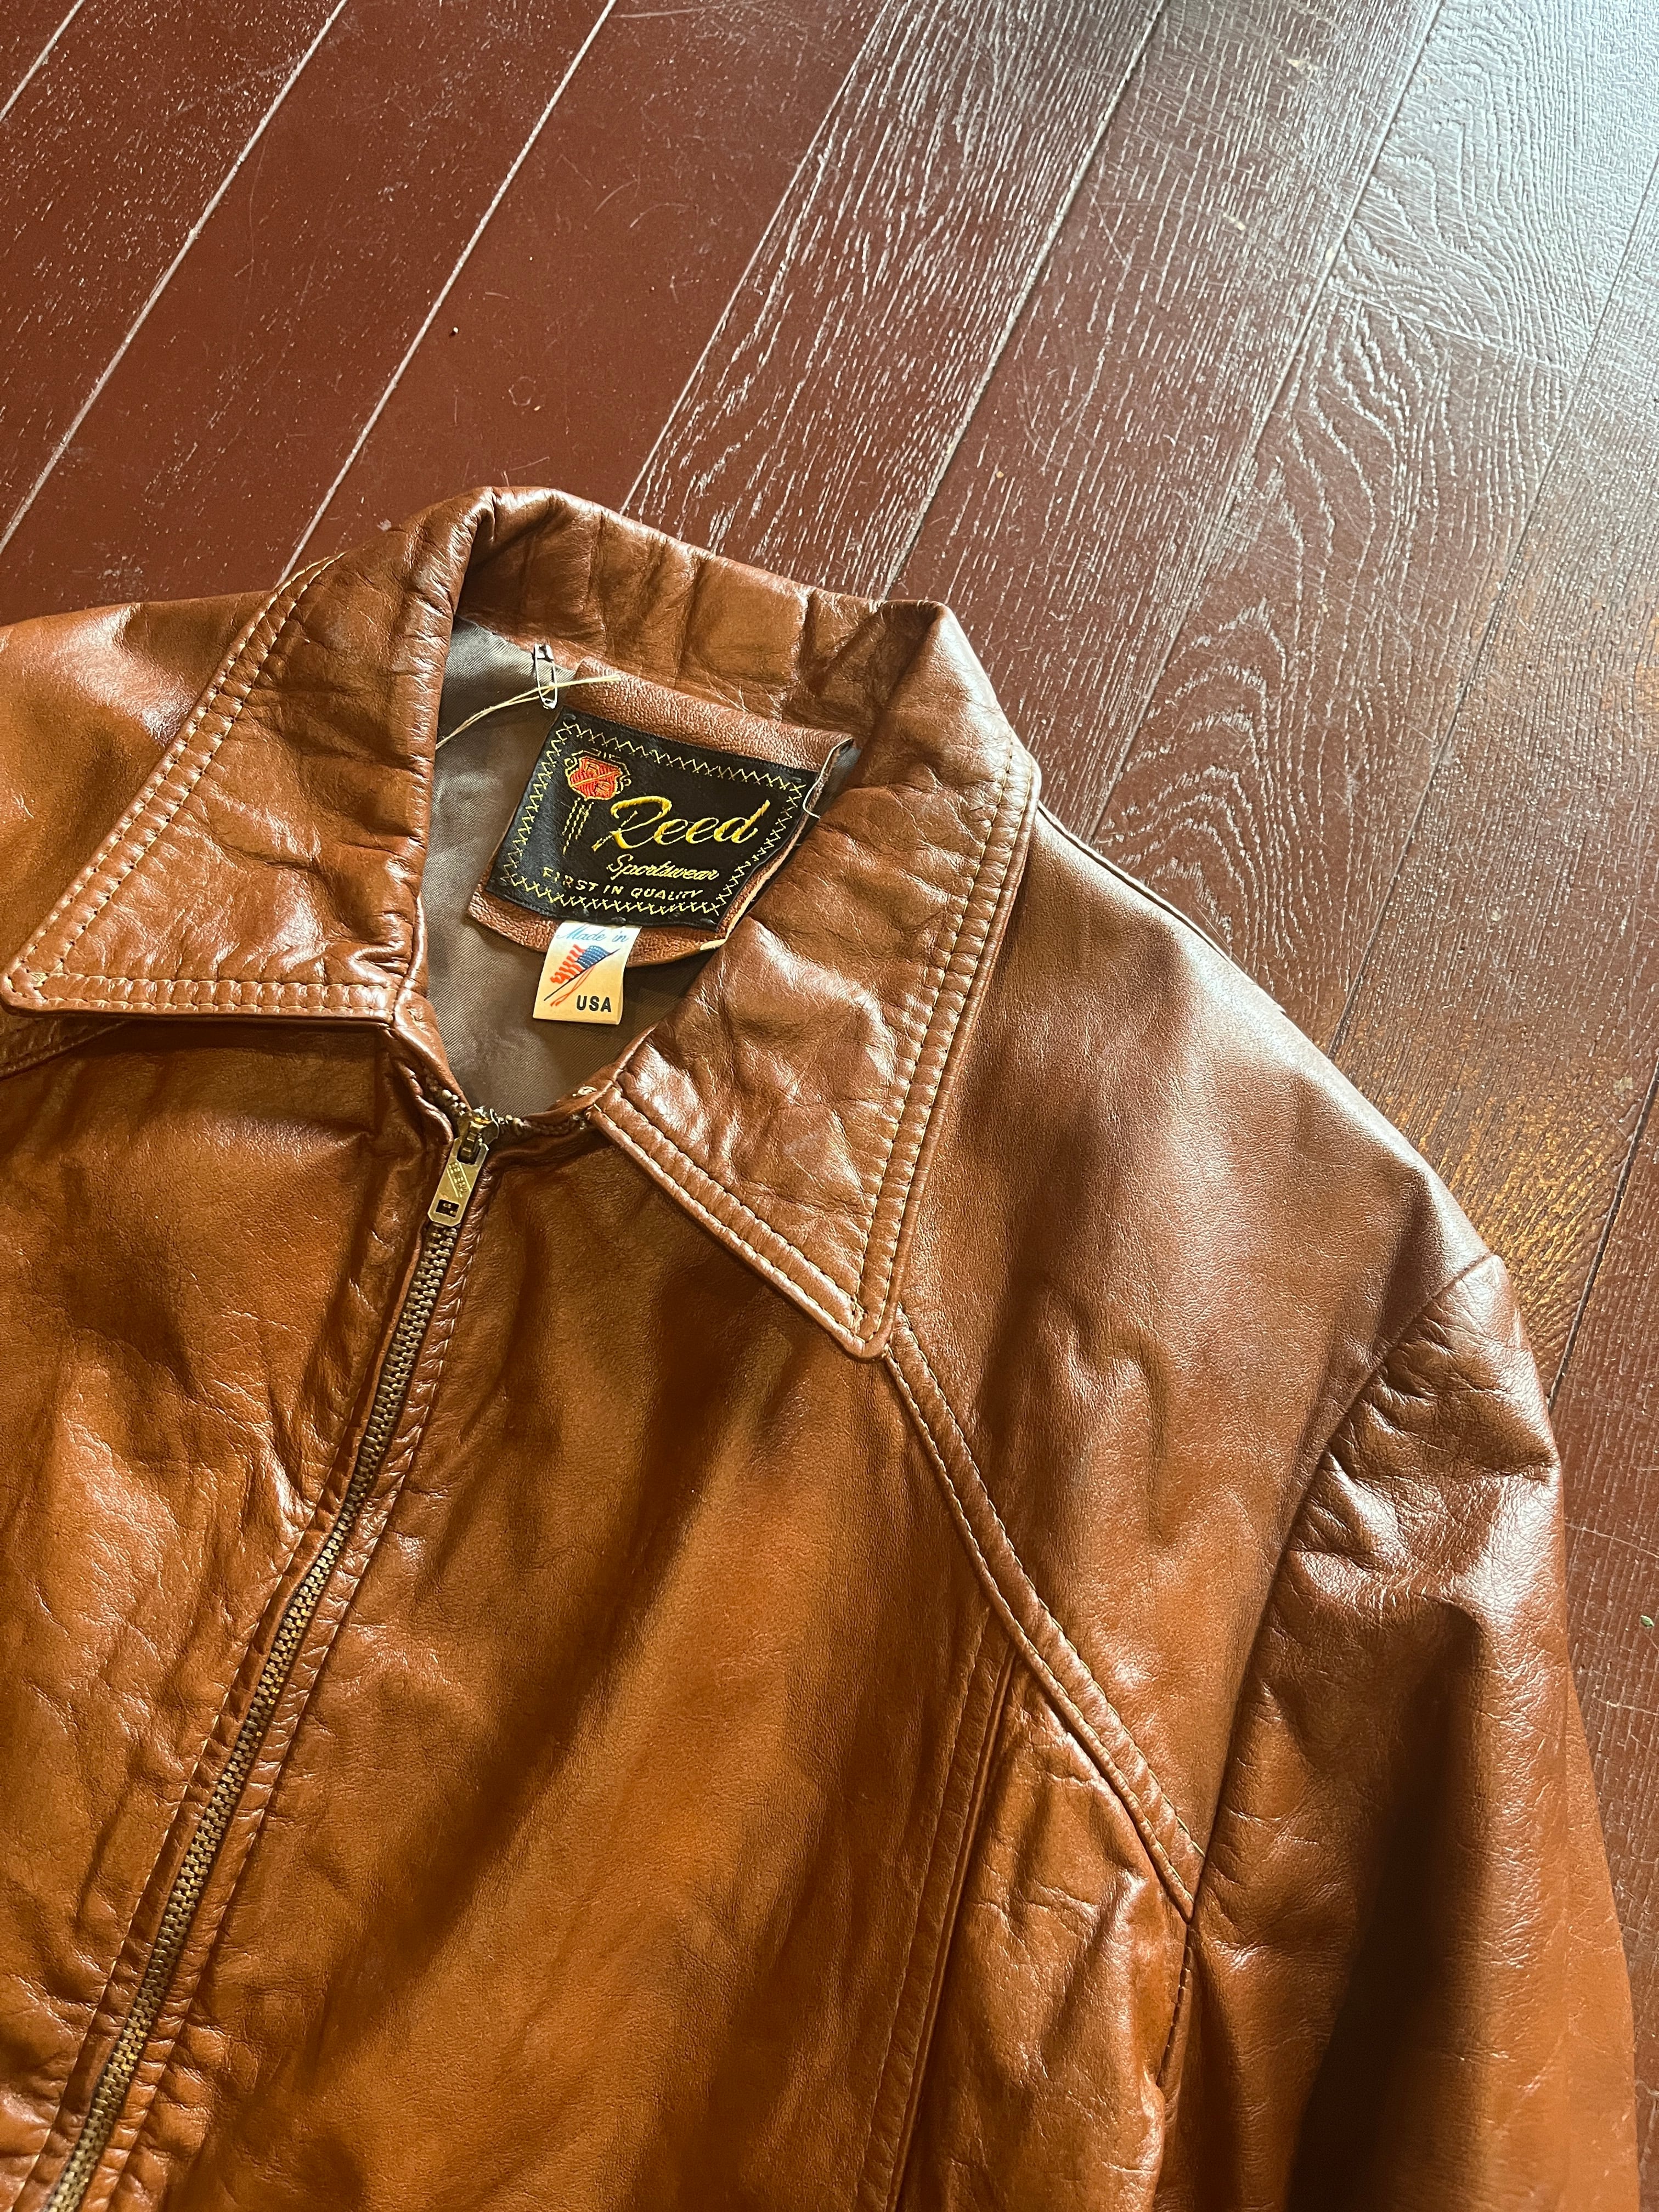 70~80's Reed Sportswear Single Leather JKT 本革 シングル レザージャケット USA サイズ42 L-XL